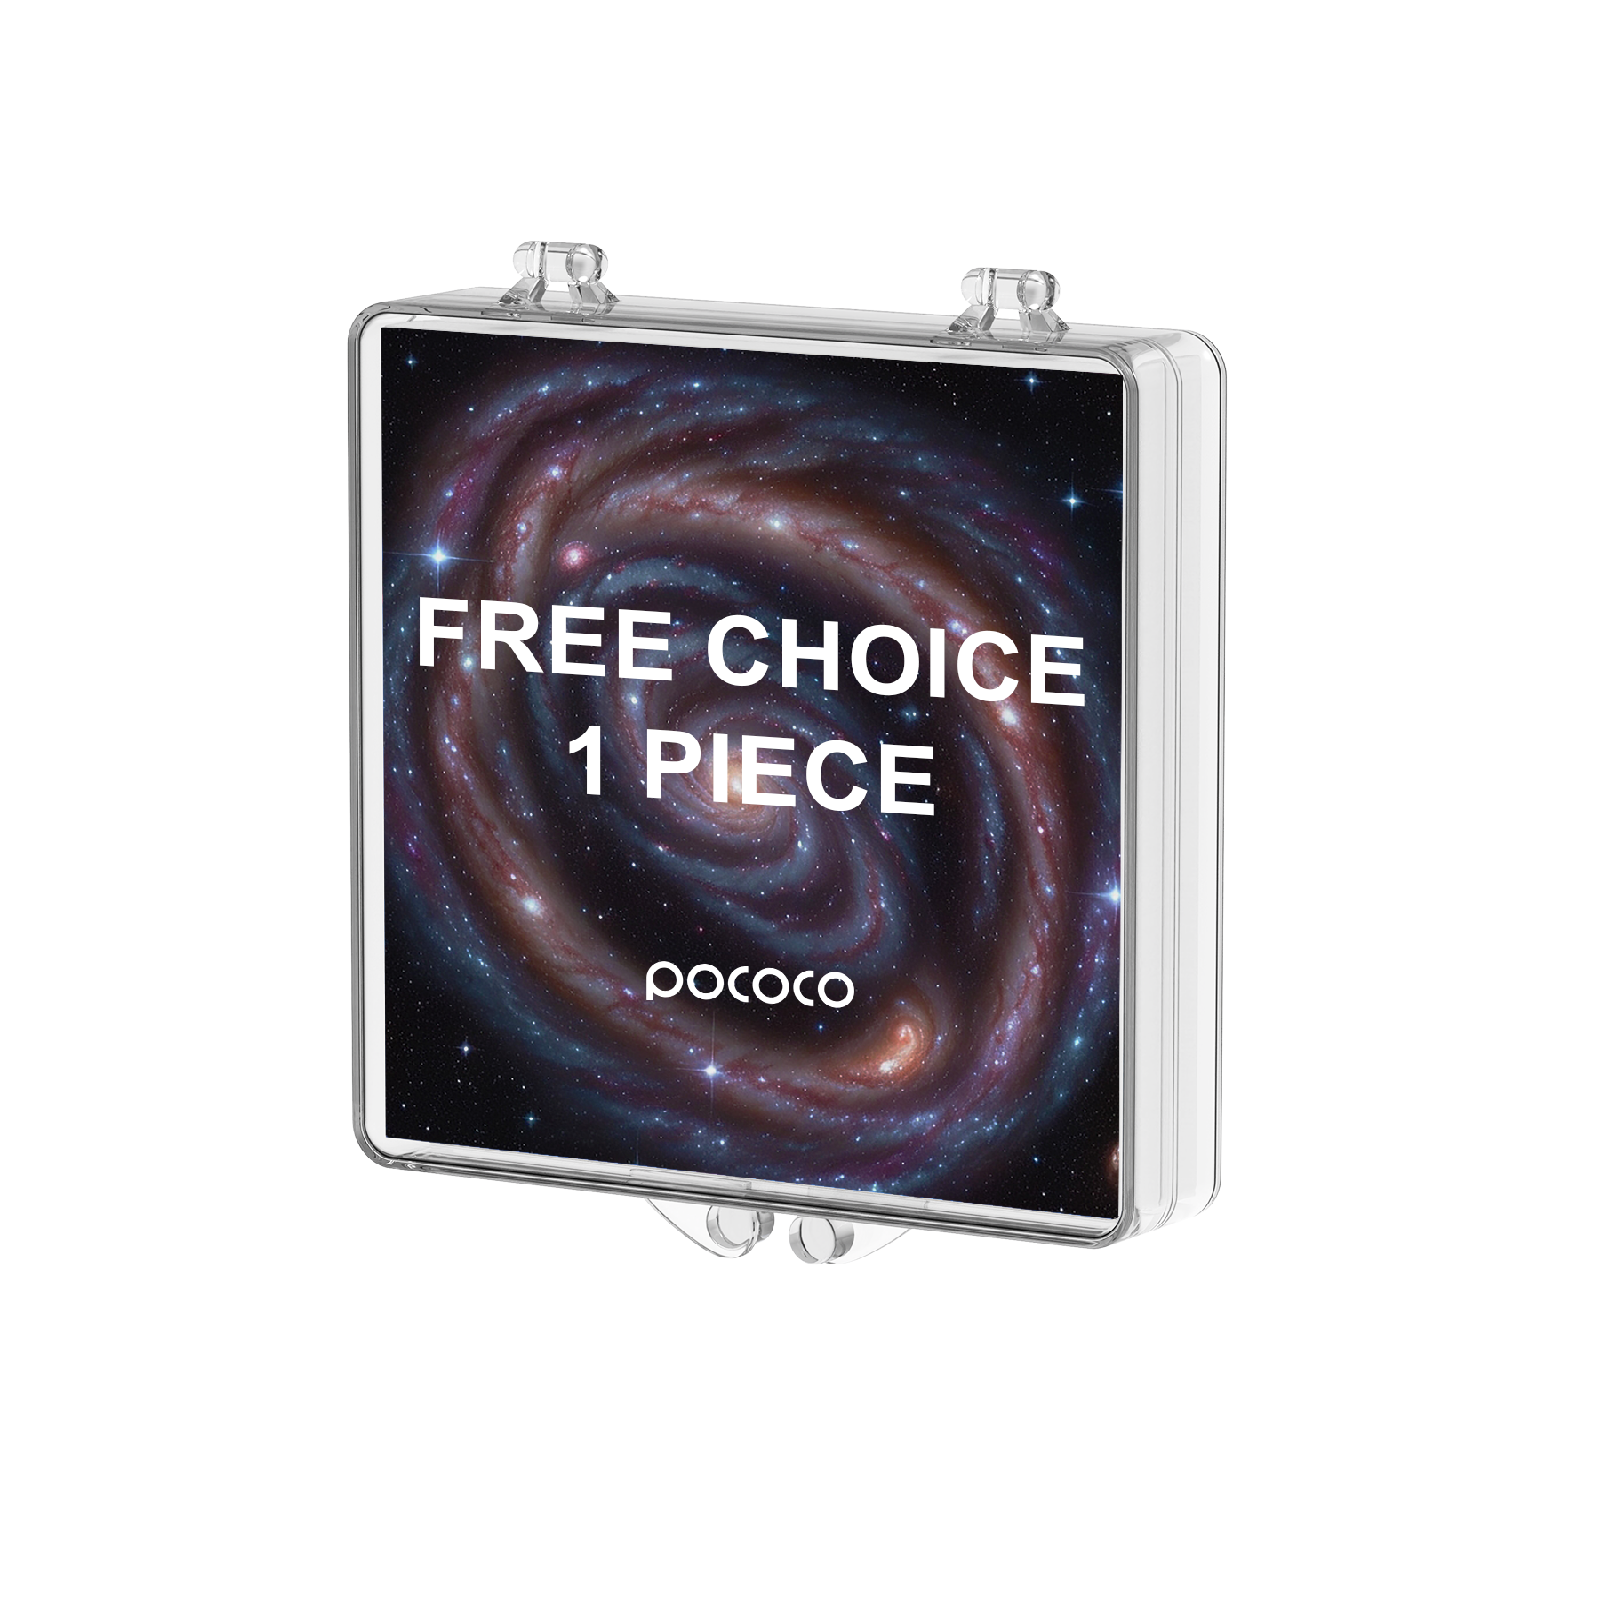 POCOCO Galaxy Projector Disc - Free Choice 1 Piece